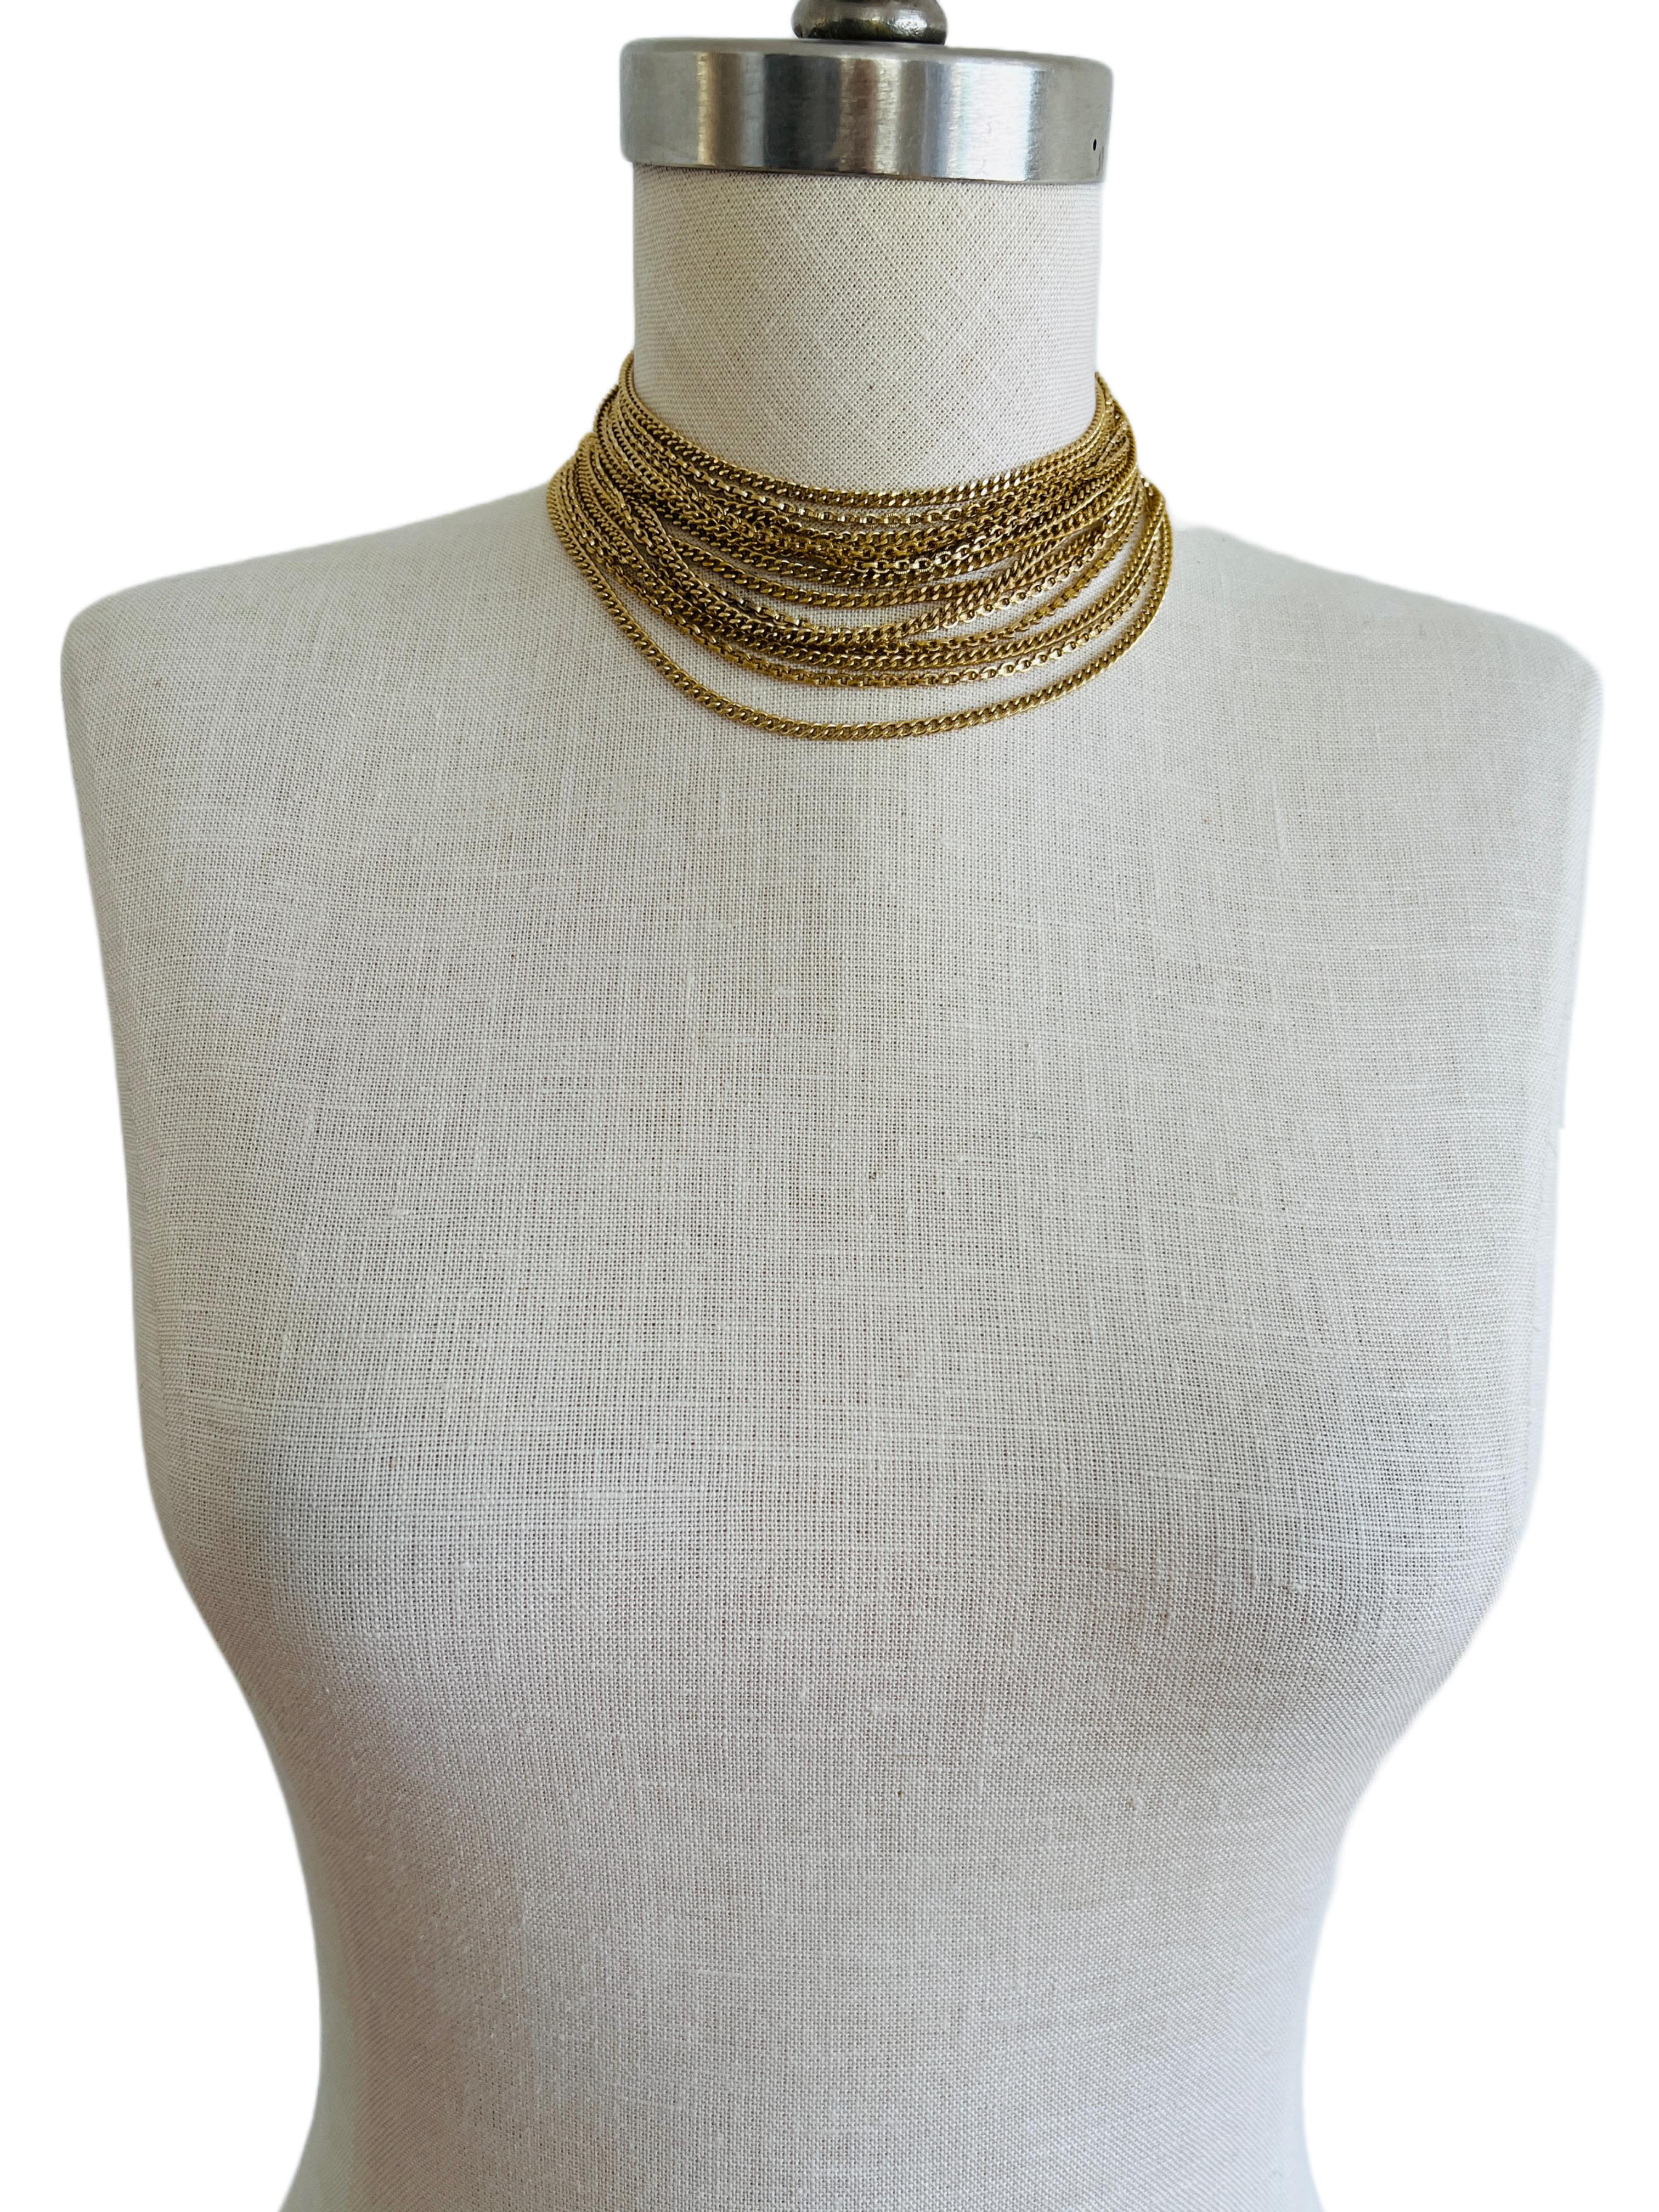 vintage crown trifari necklace